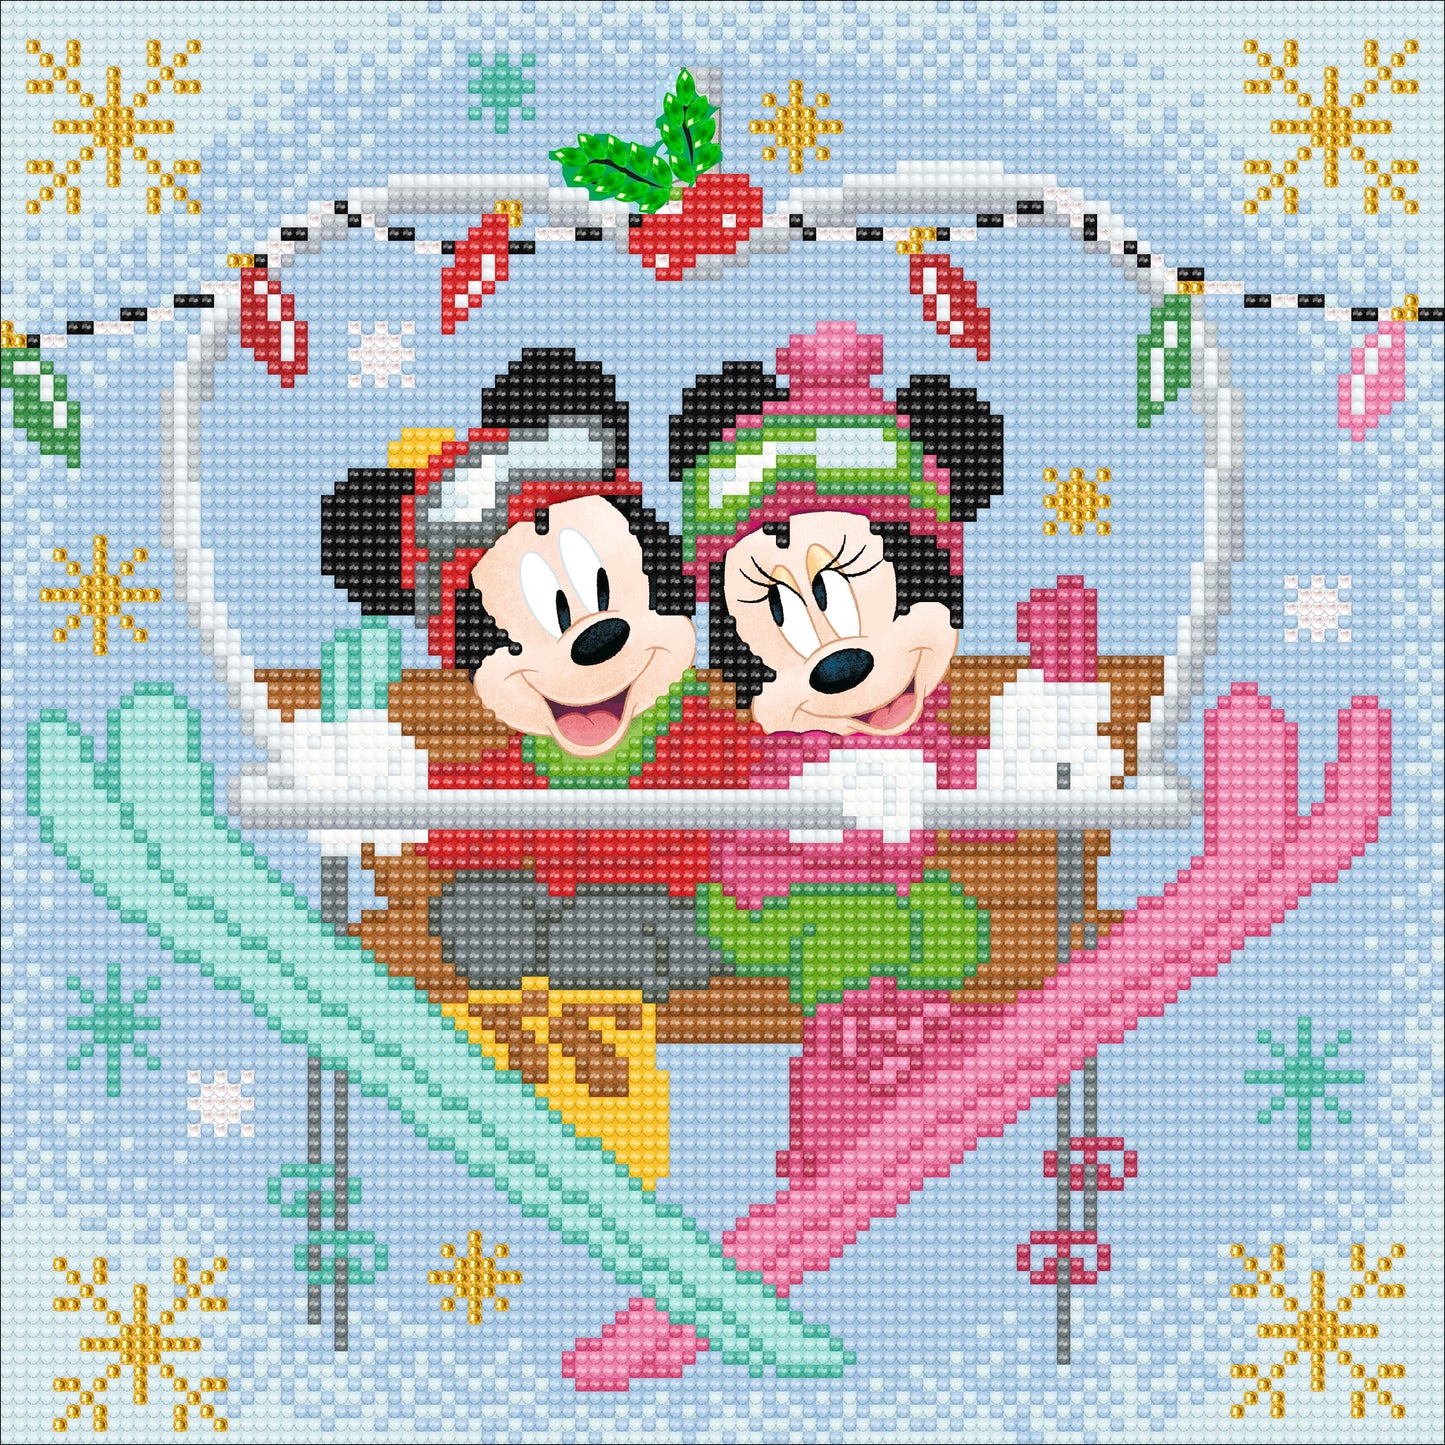 CAK-DNY709M: Winter Mickey and Minnie, 30x30cm Crystal Art Kit